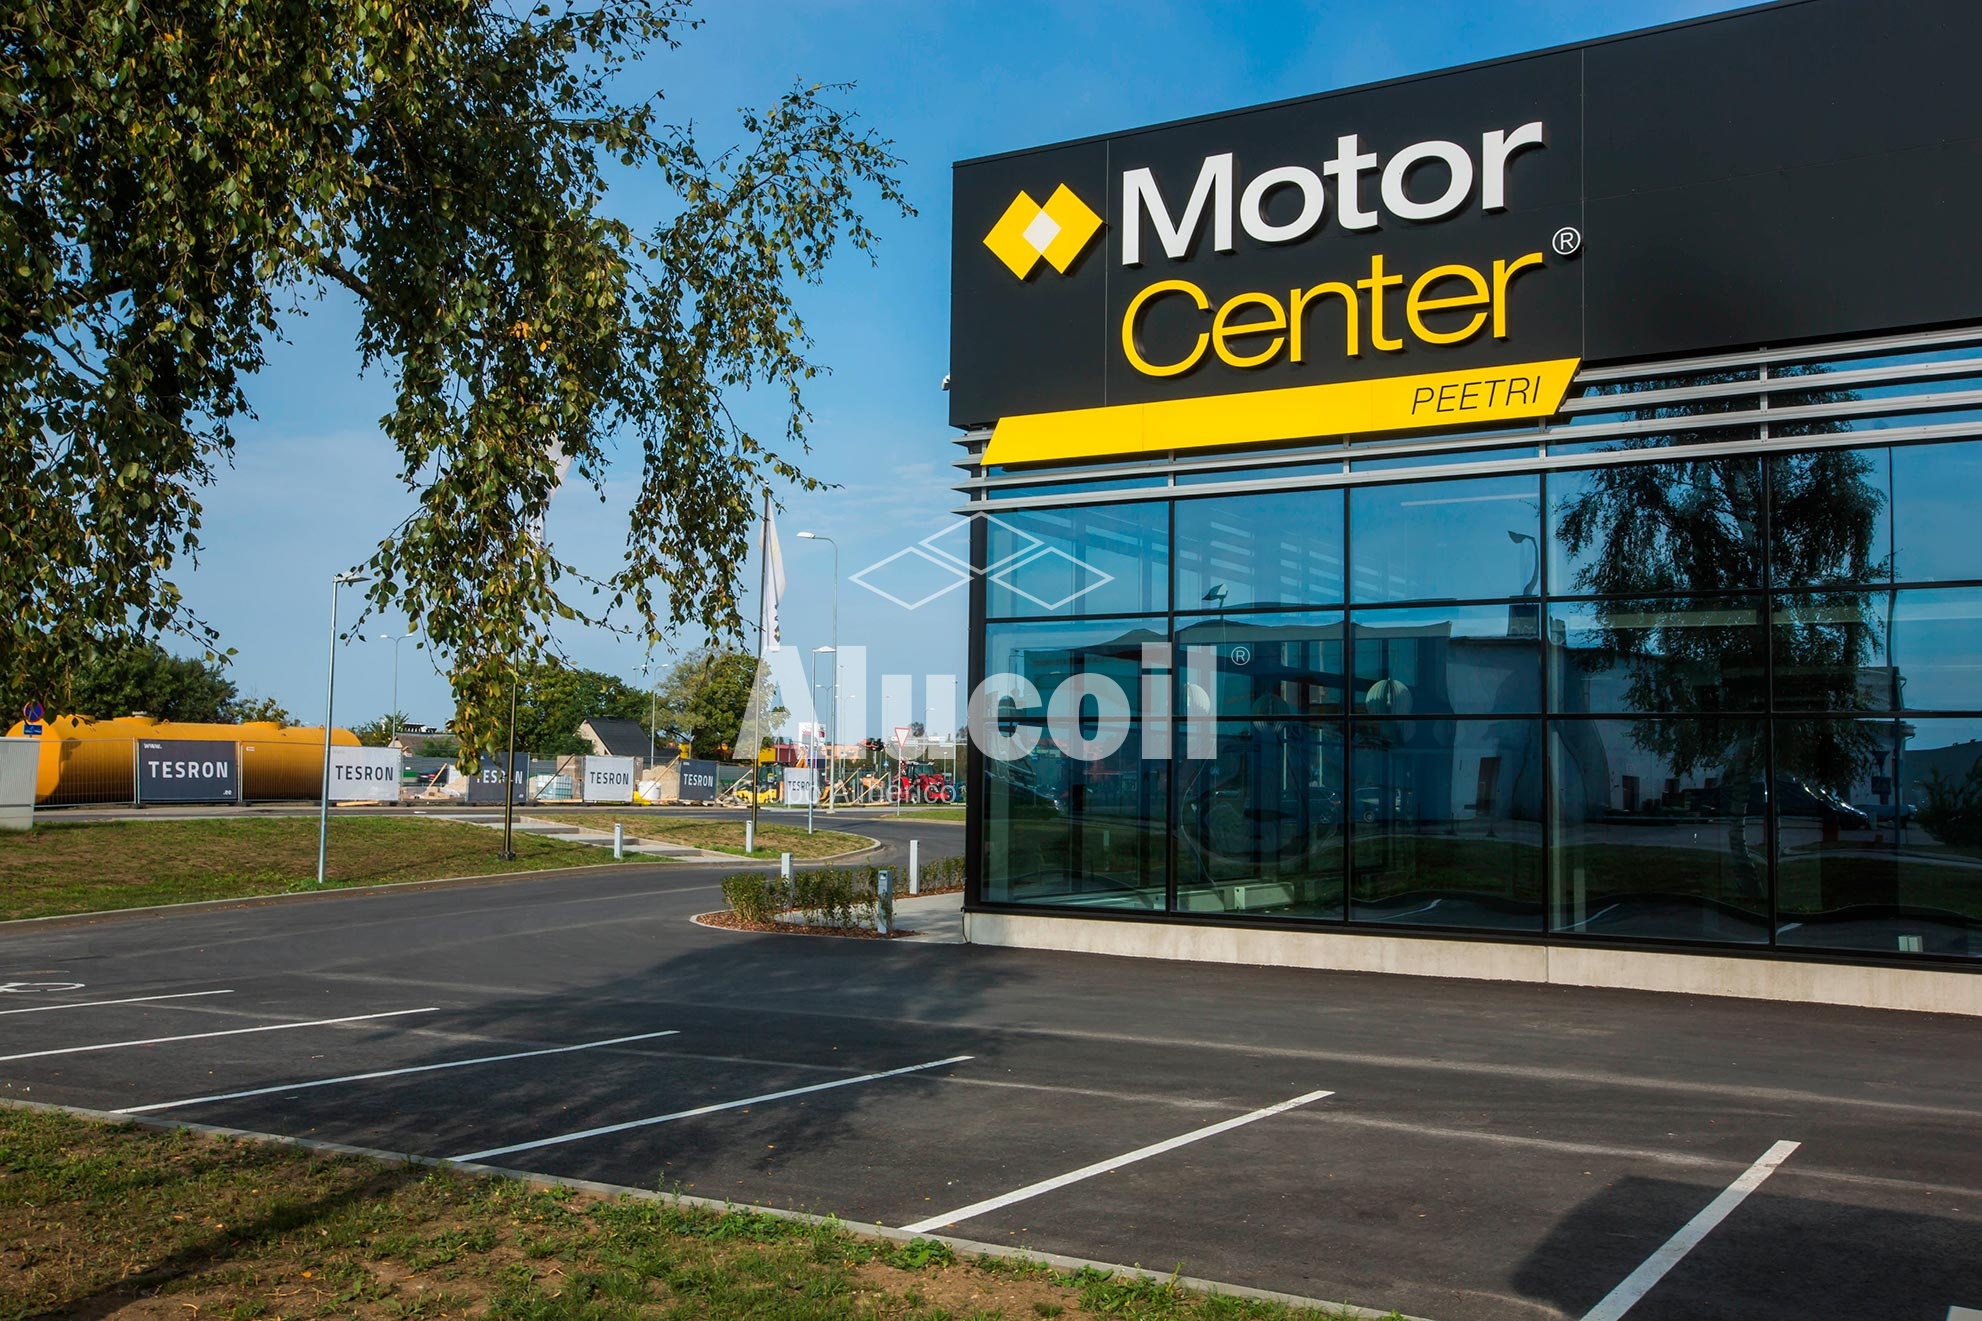 Moto Center Peetri Car Showroom